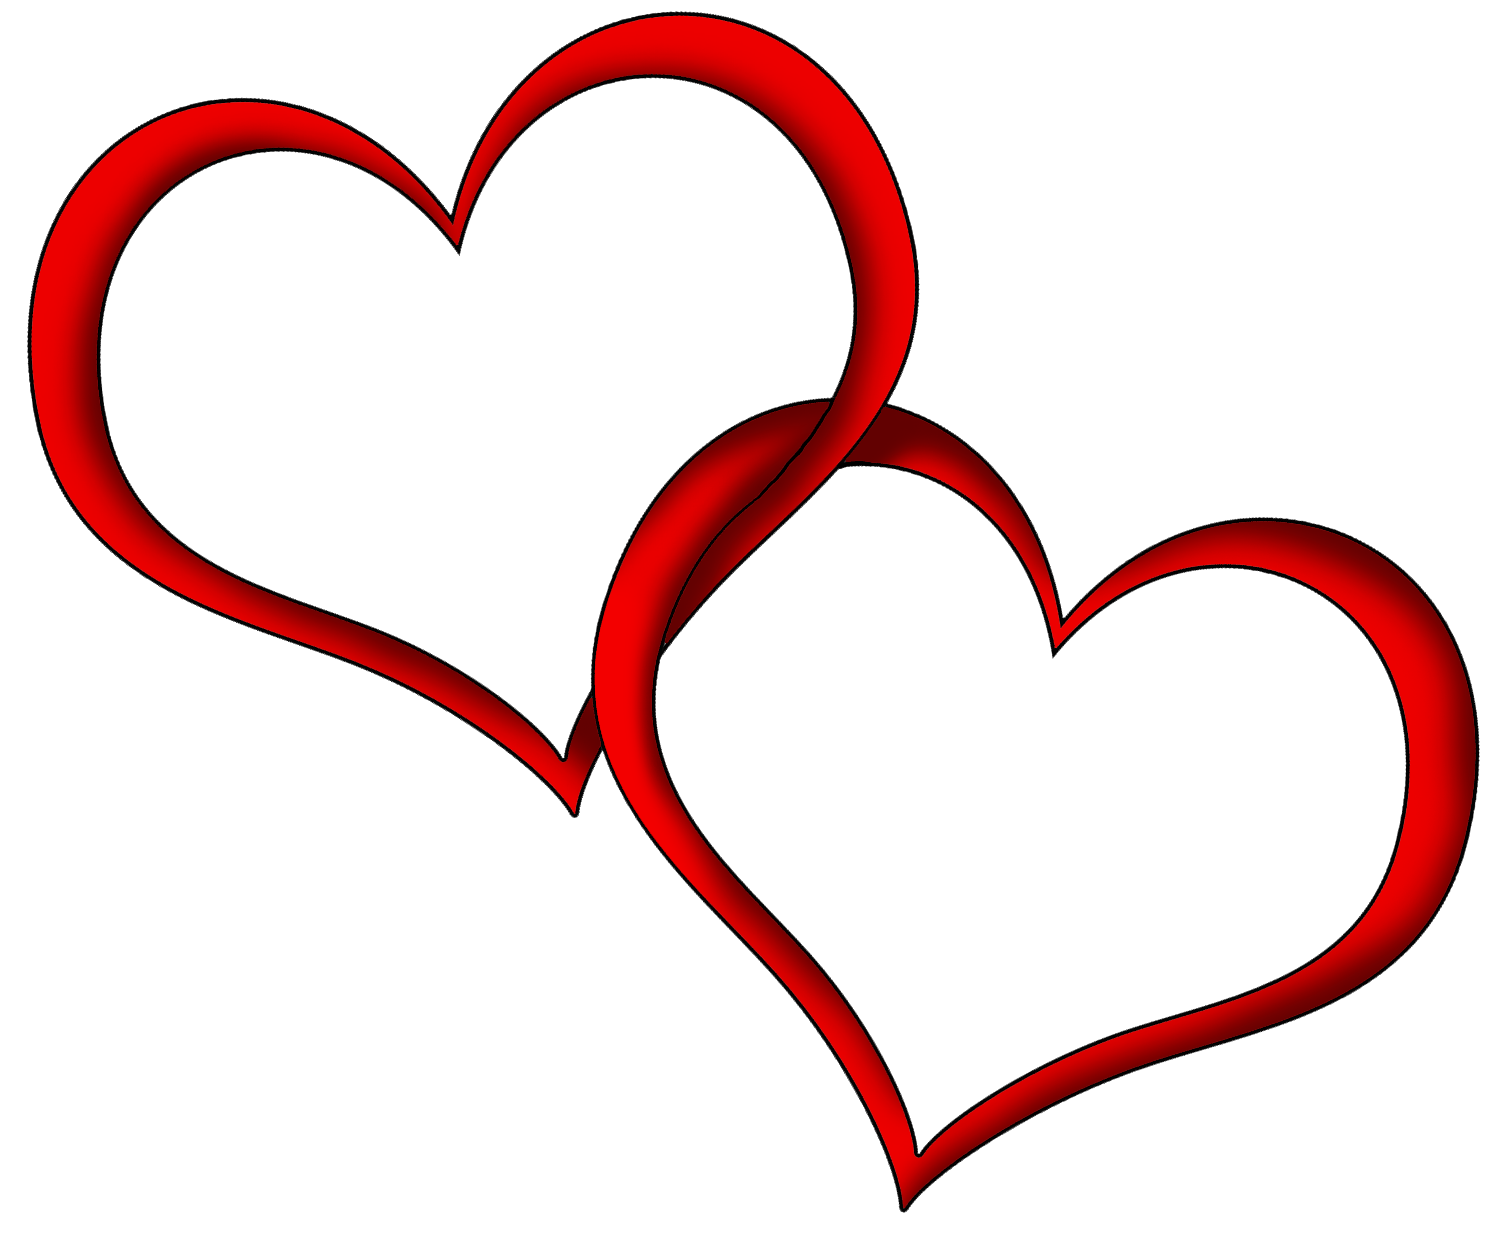 ... Red Heart Clip Art - clipartall